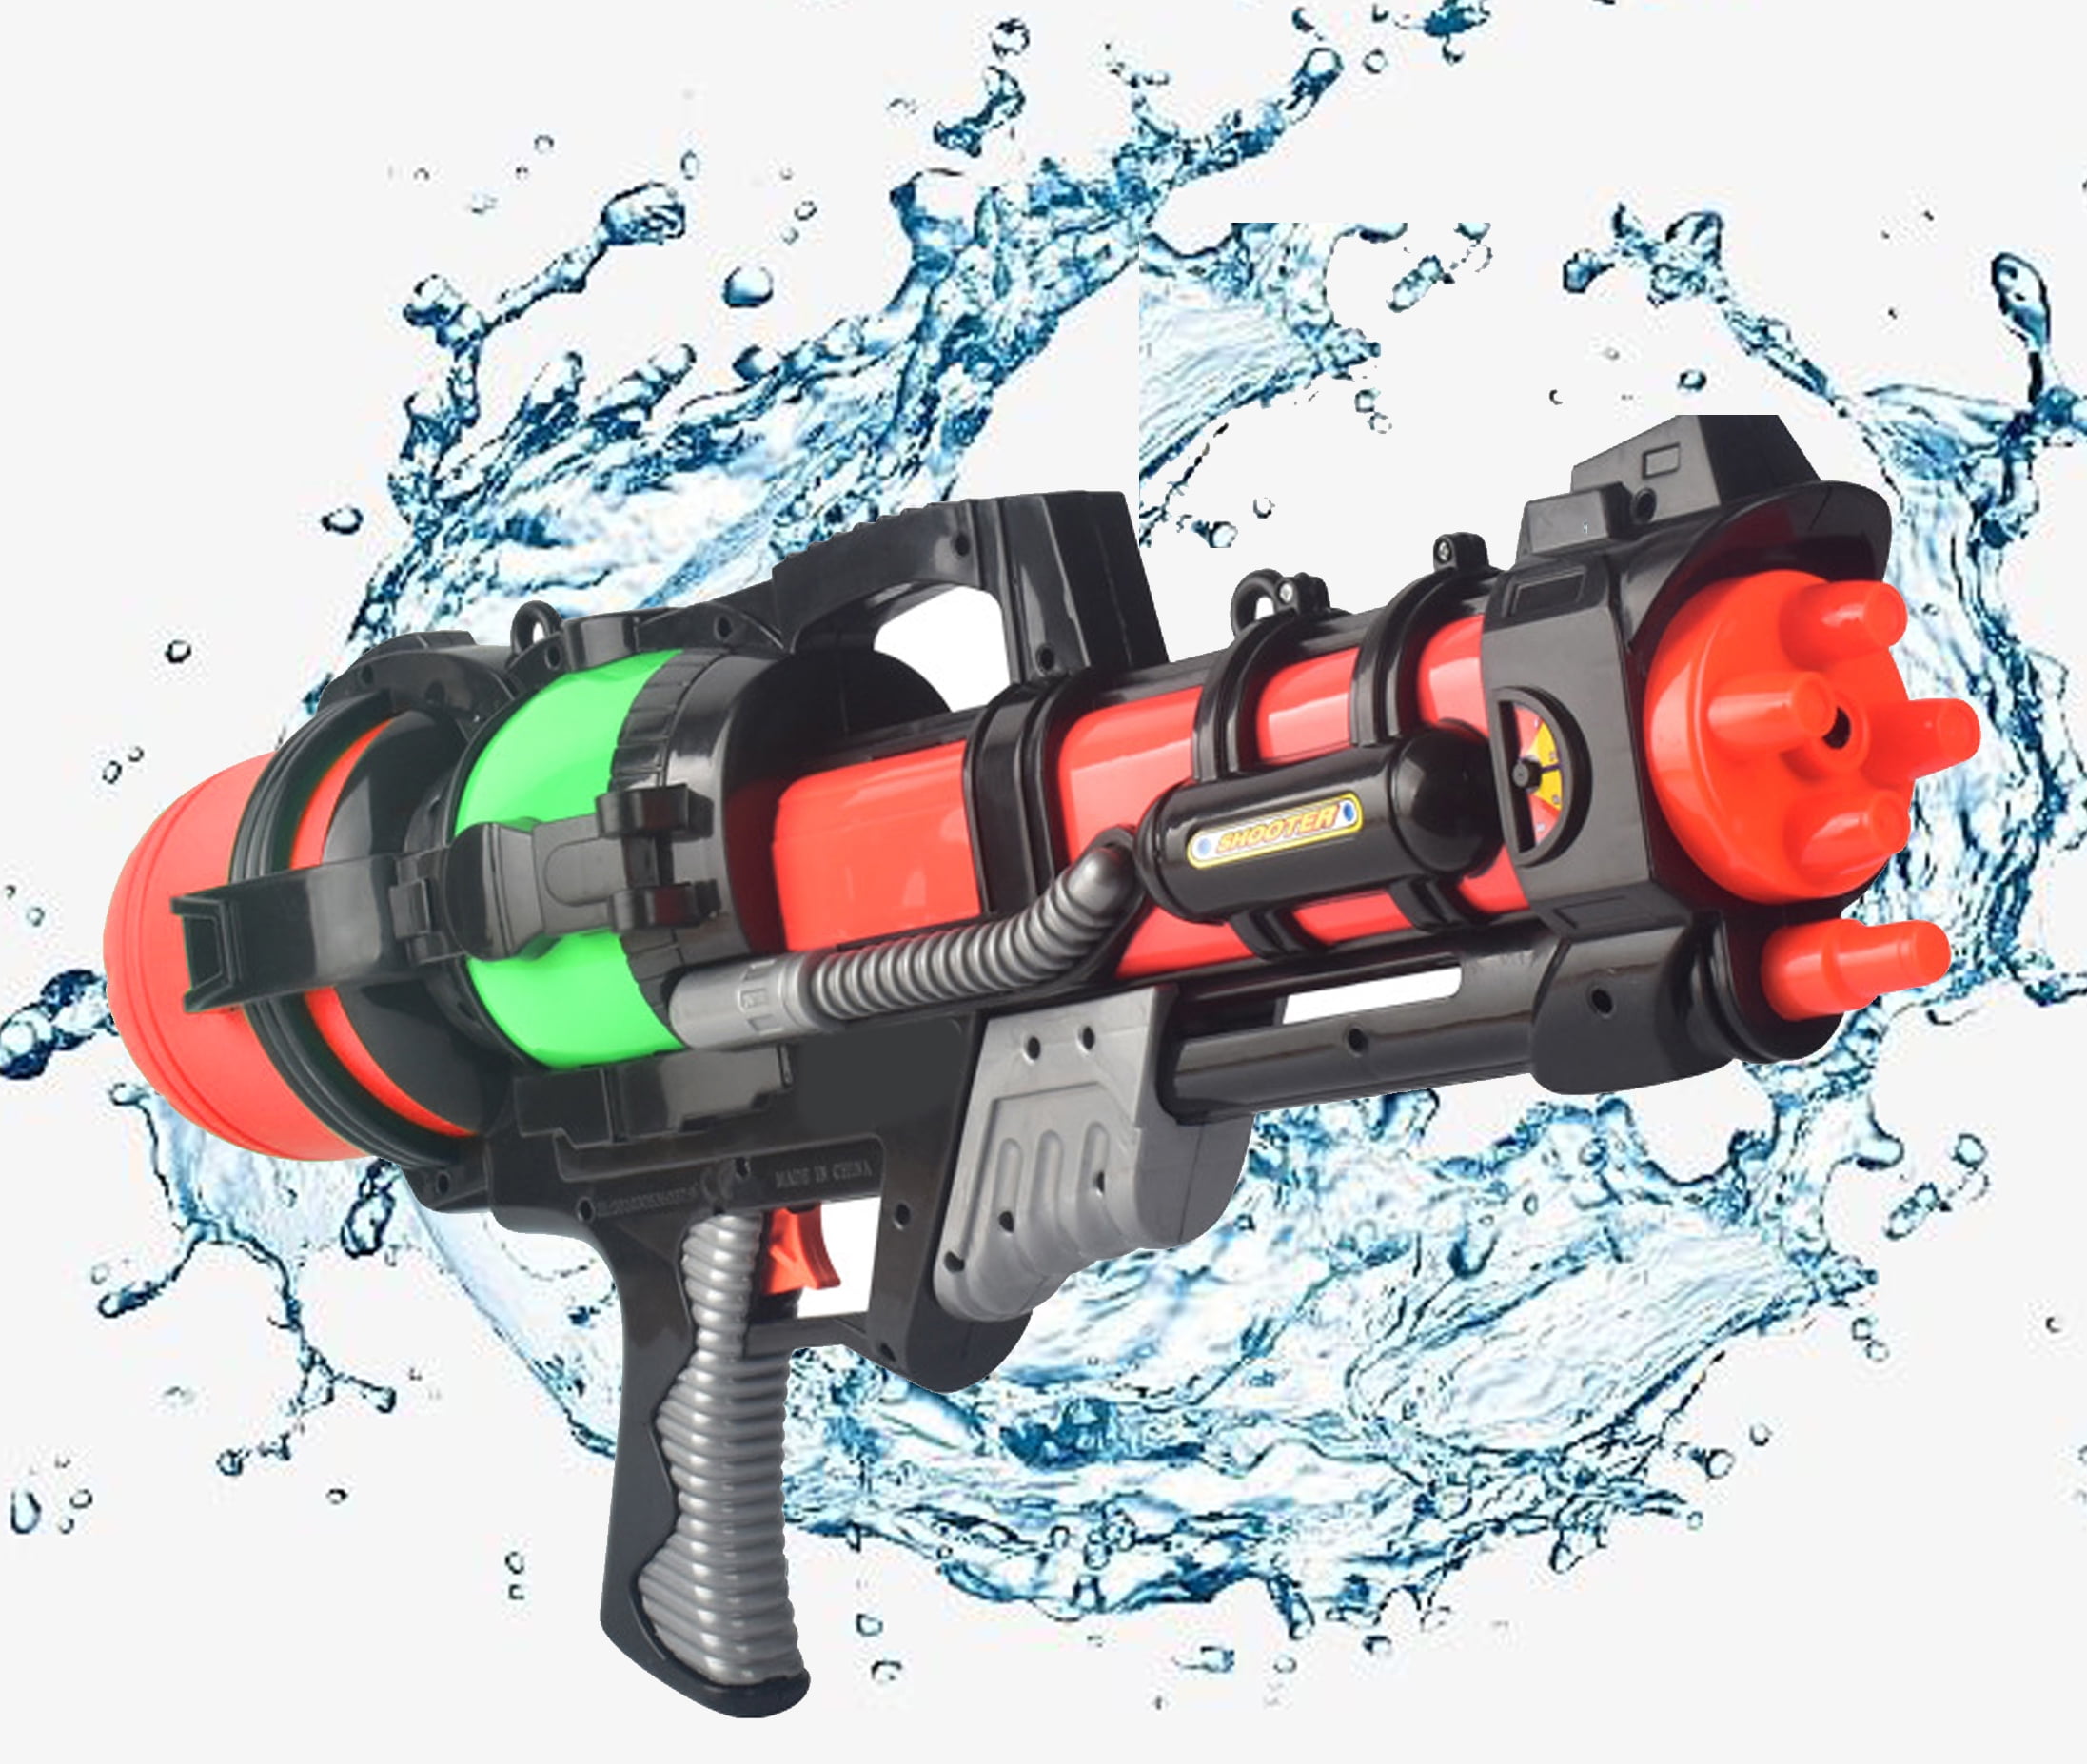 Ultra Water Blaster High Capacity Pump Action Water Gun